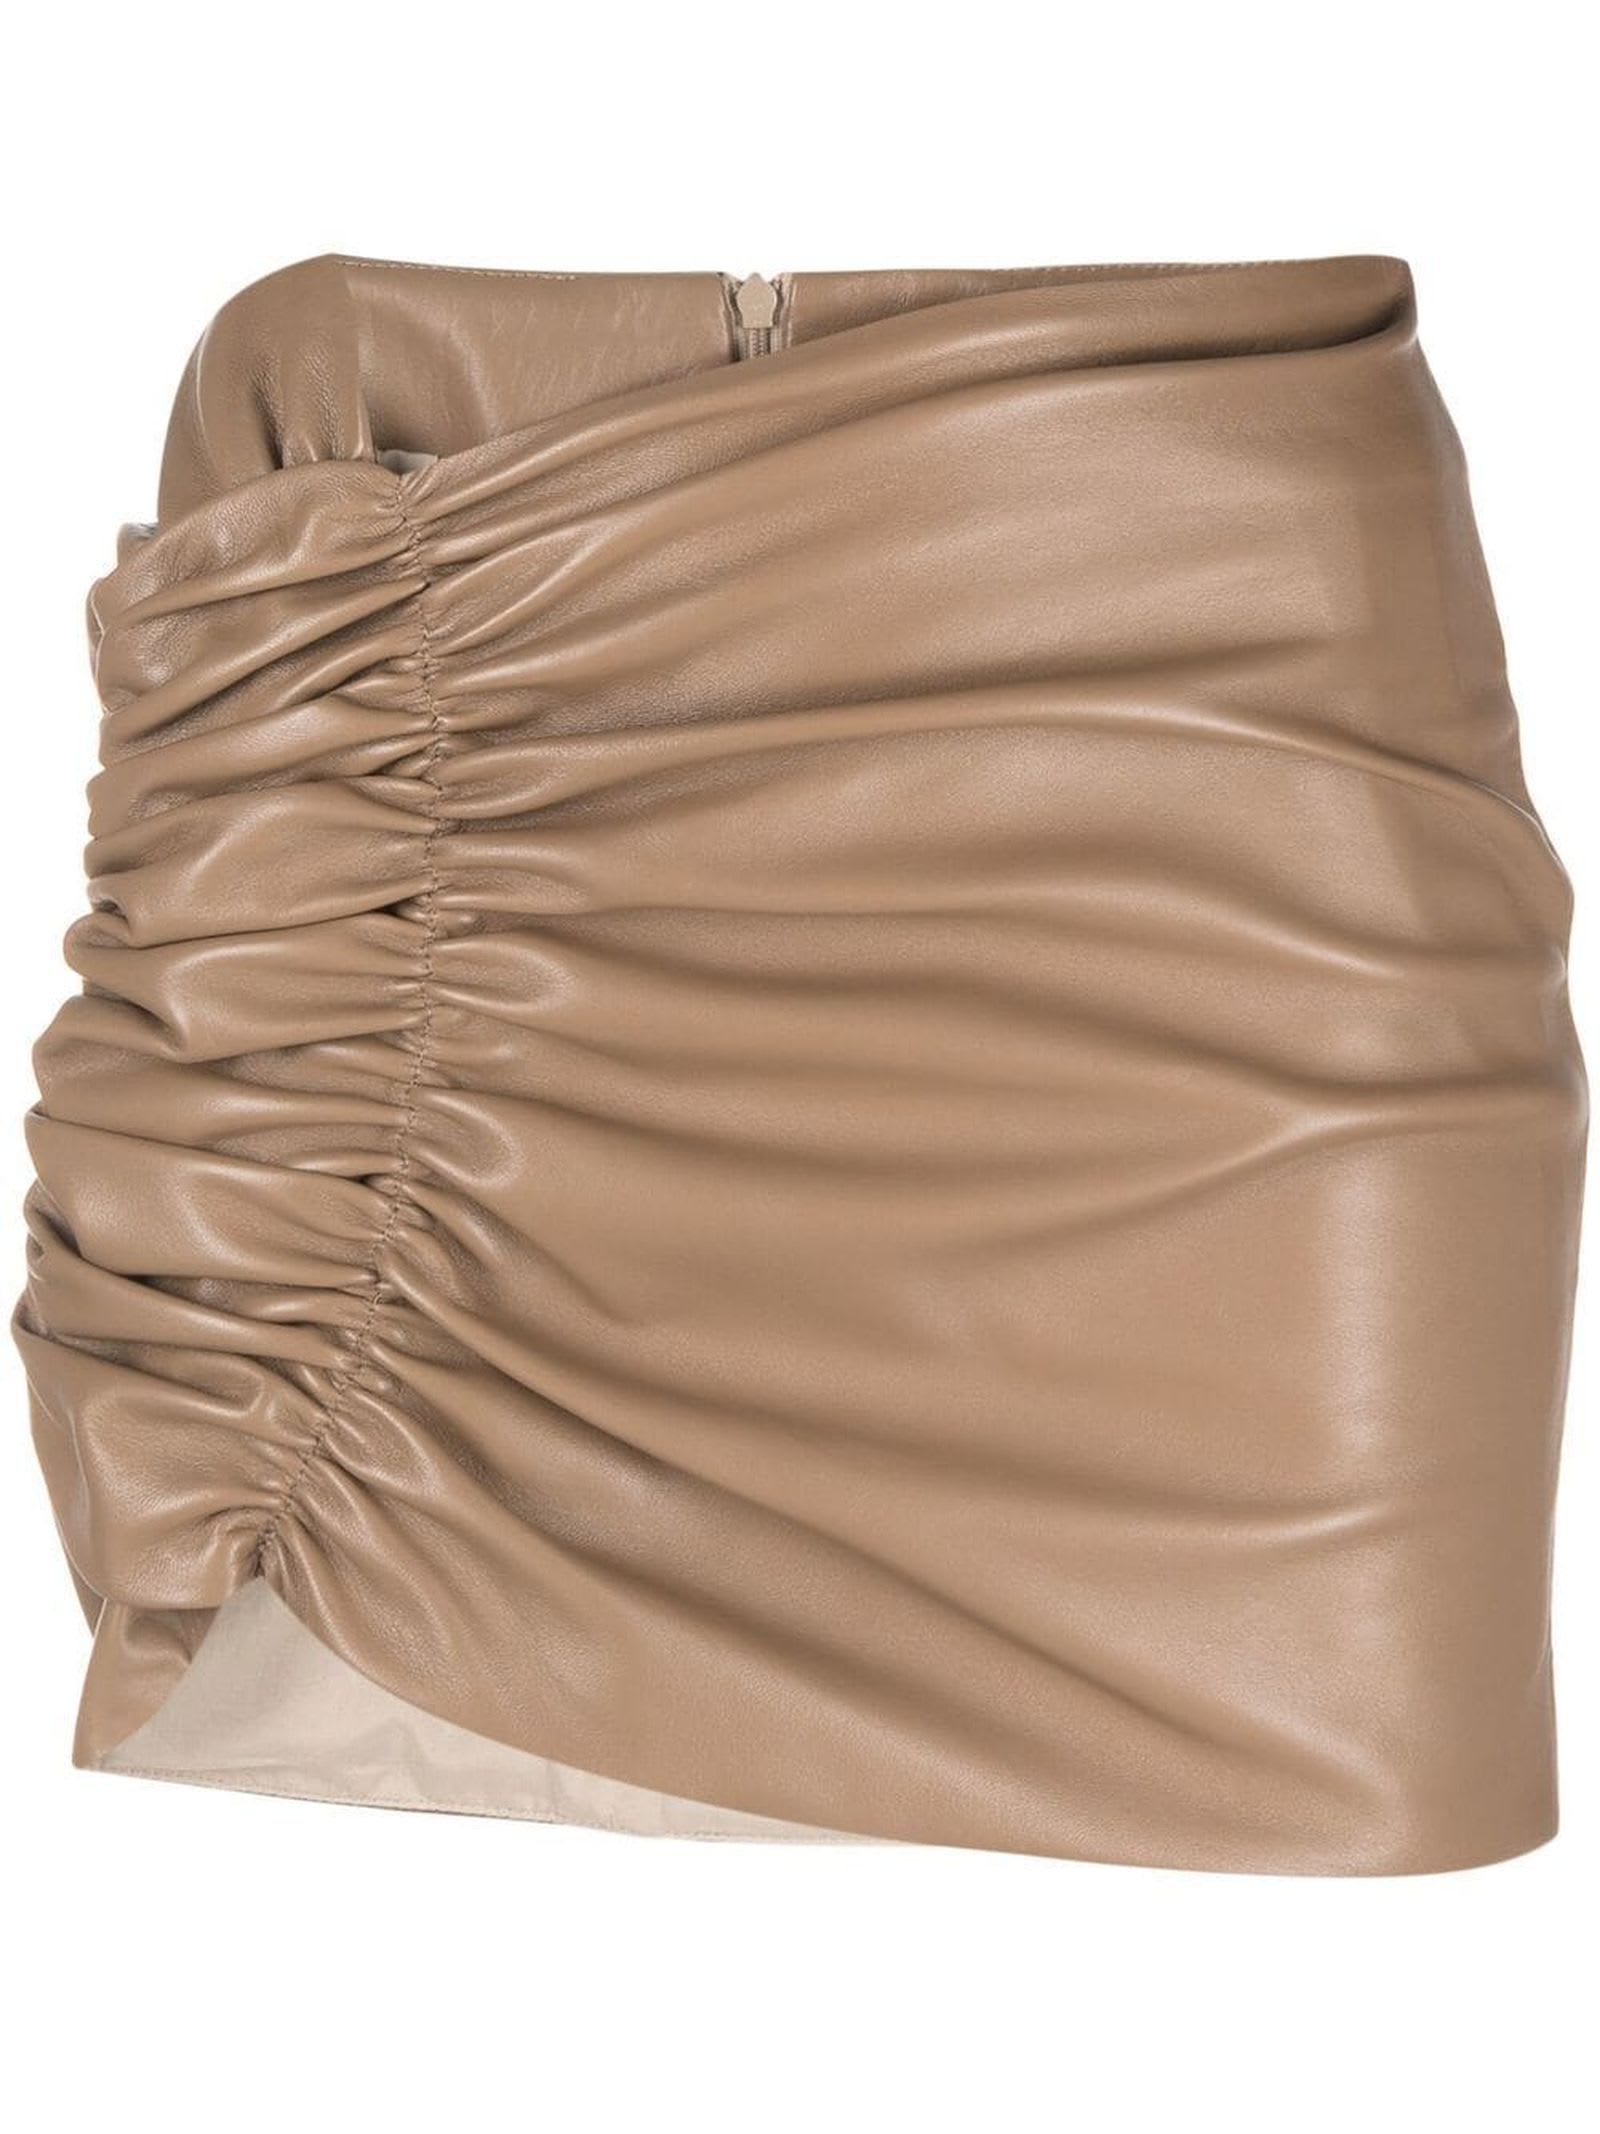 The Mannei Beige Leather Mini Skirt